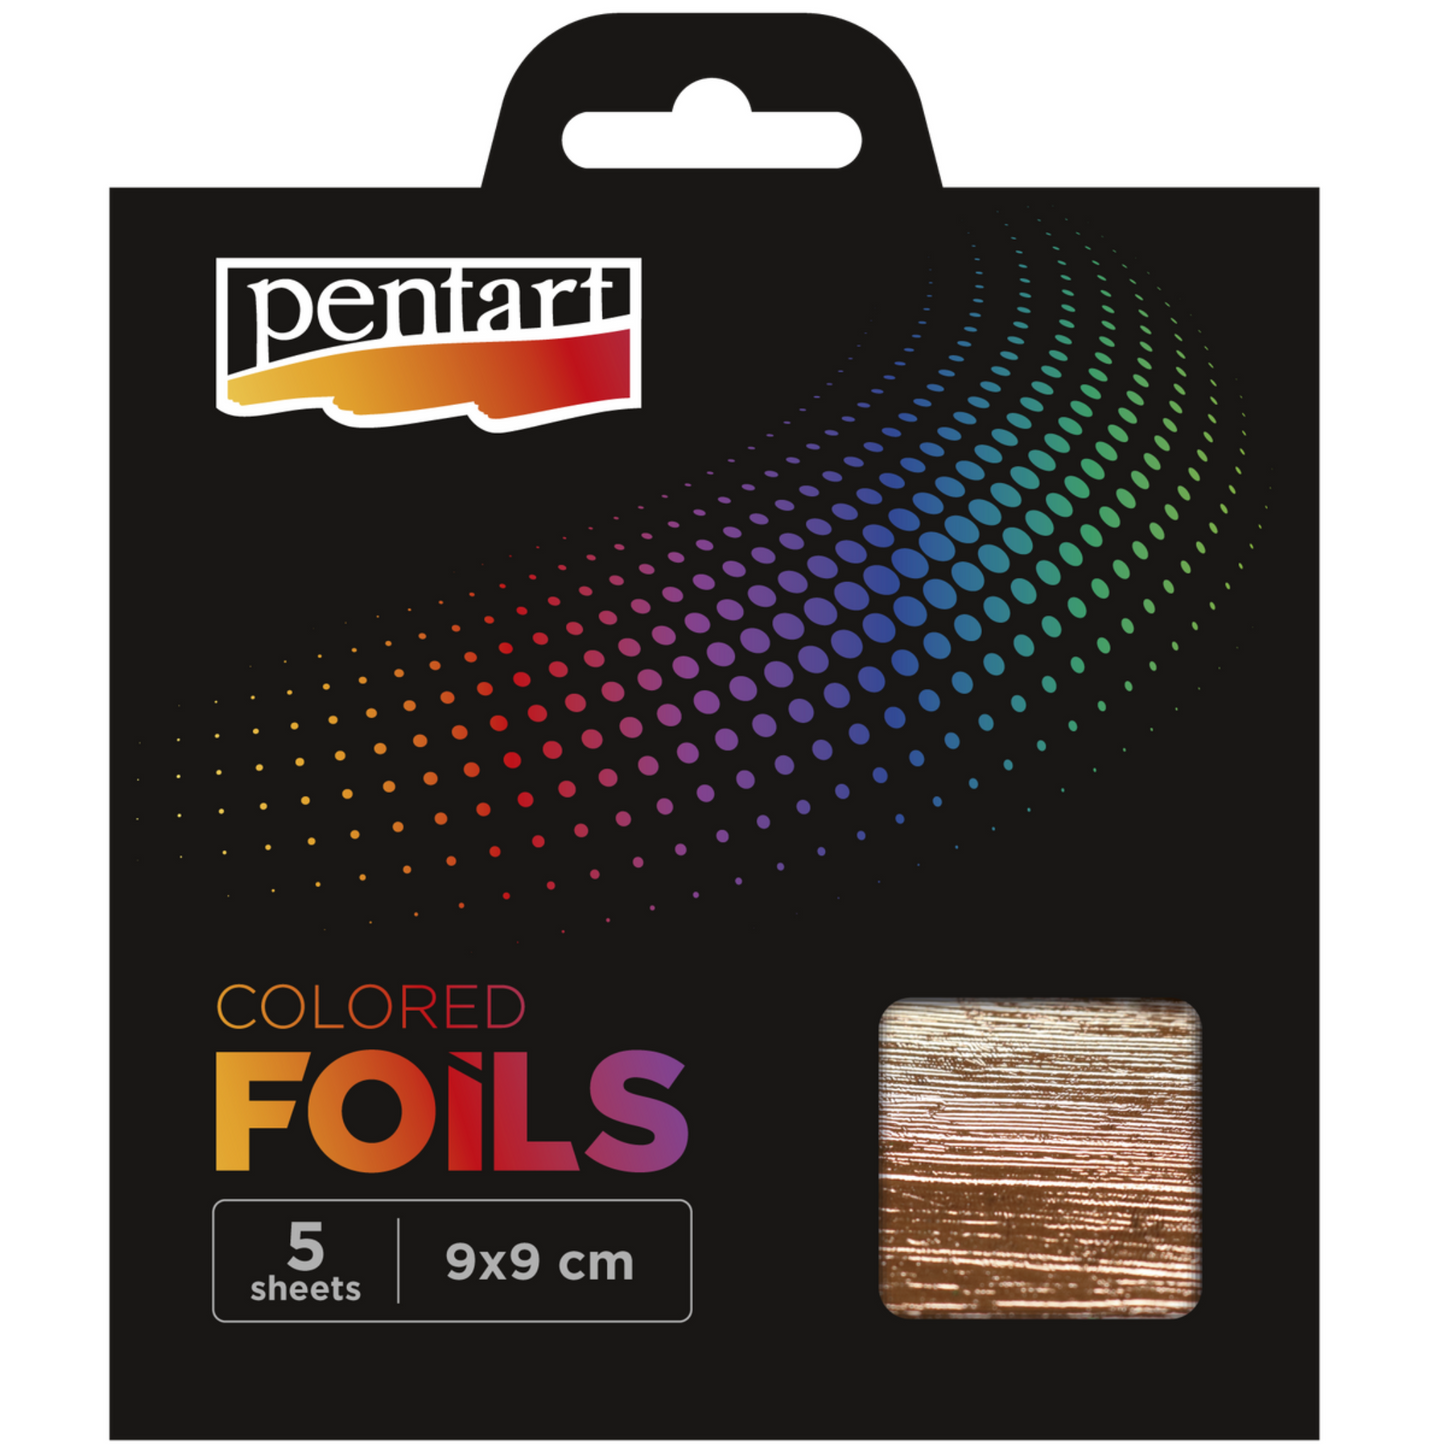 Decor Foils and Colored Foils